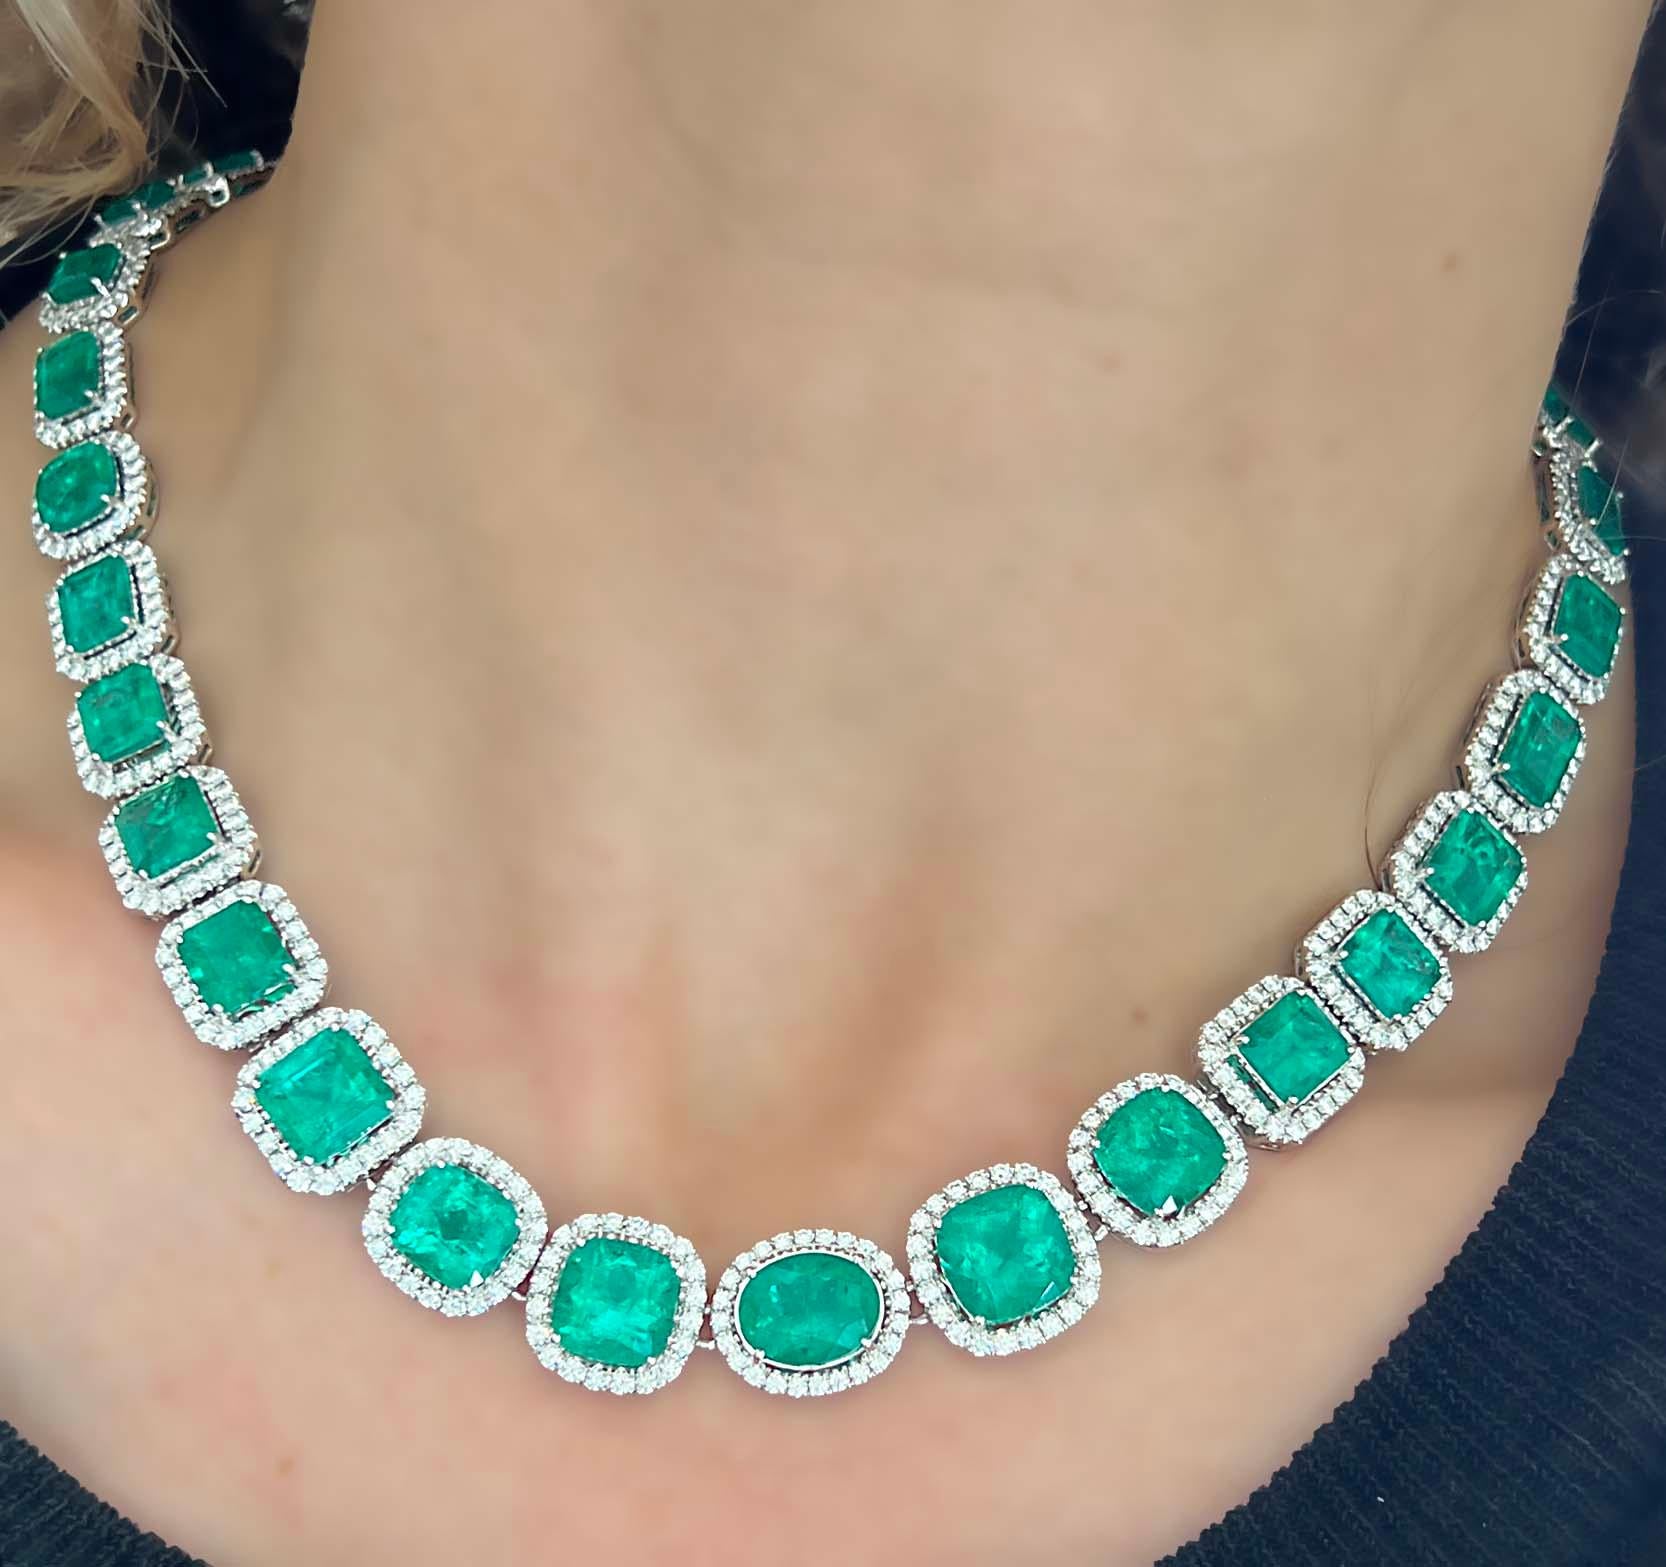 Mixed Cut 55 Carat Emerald and Diamond Necklace